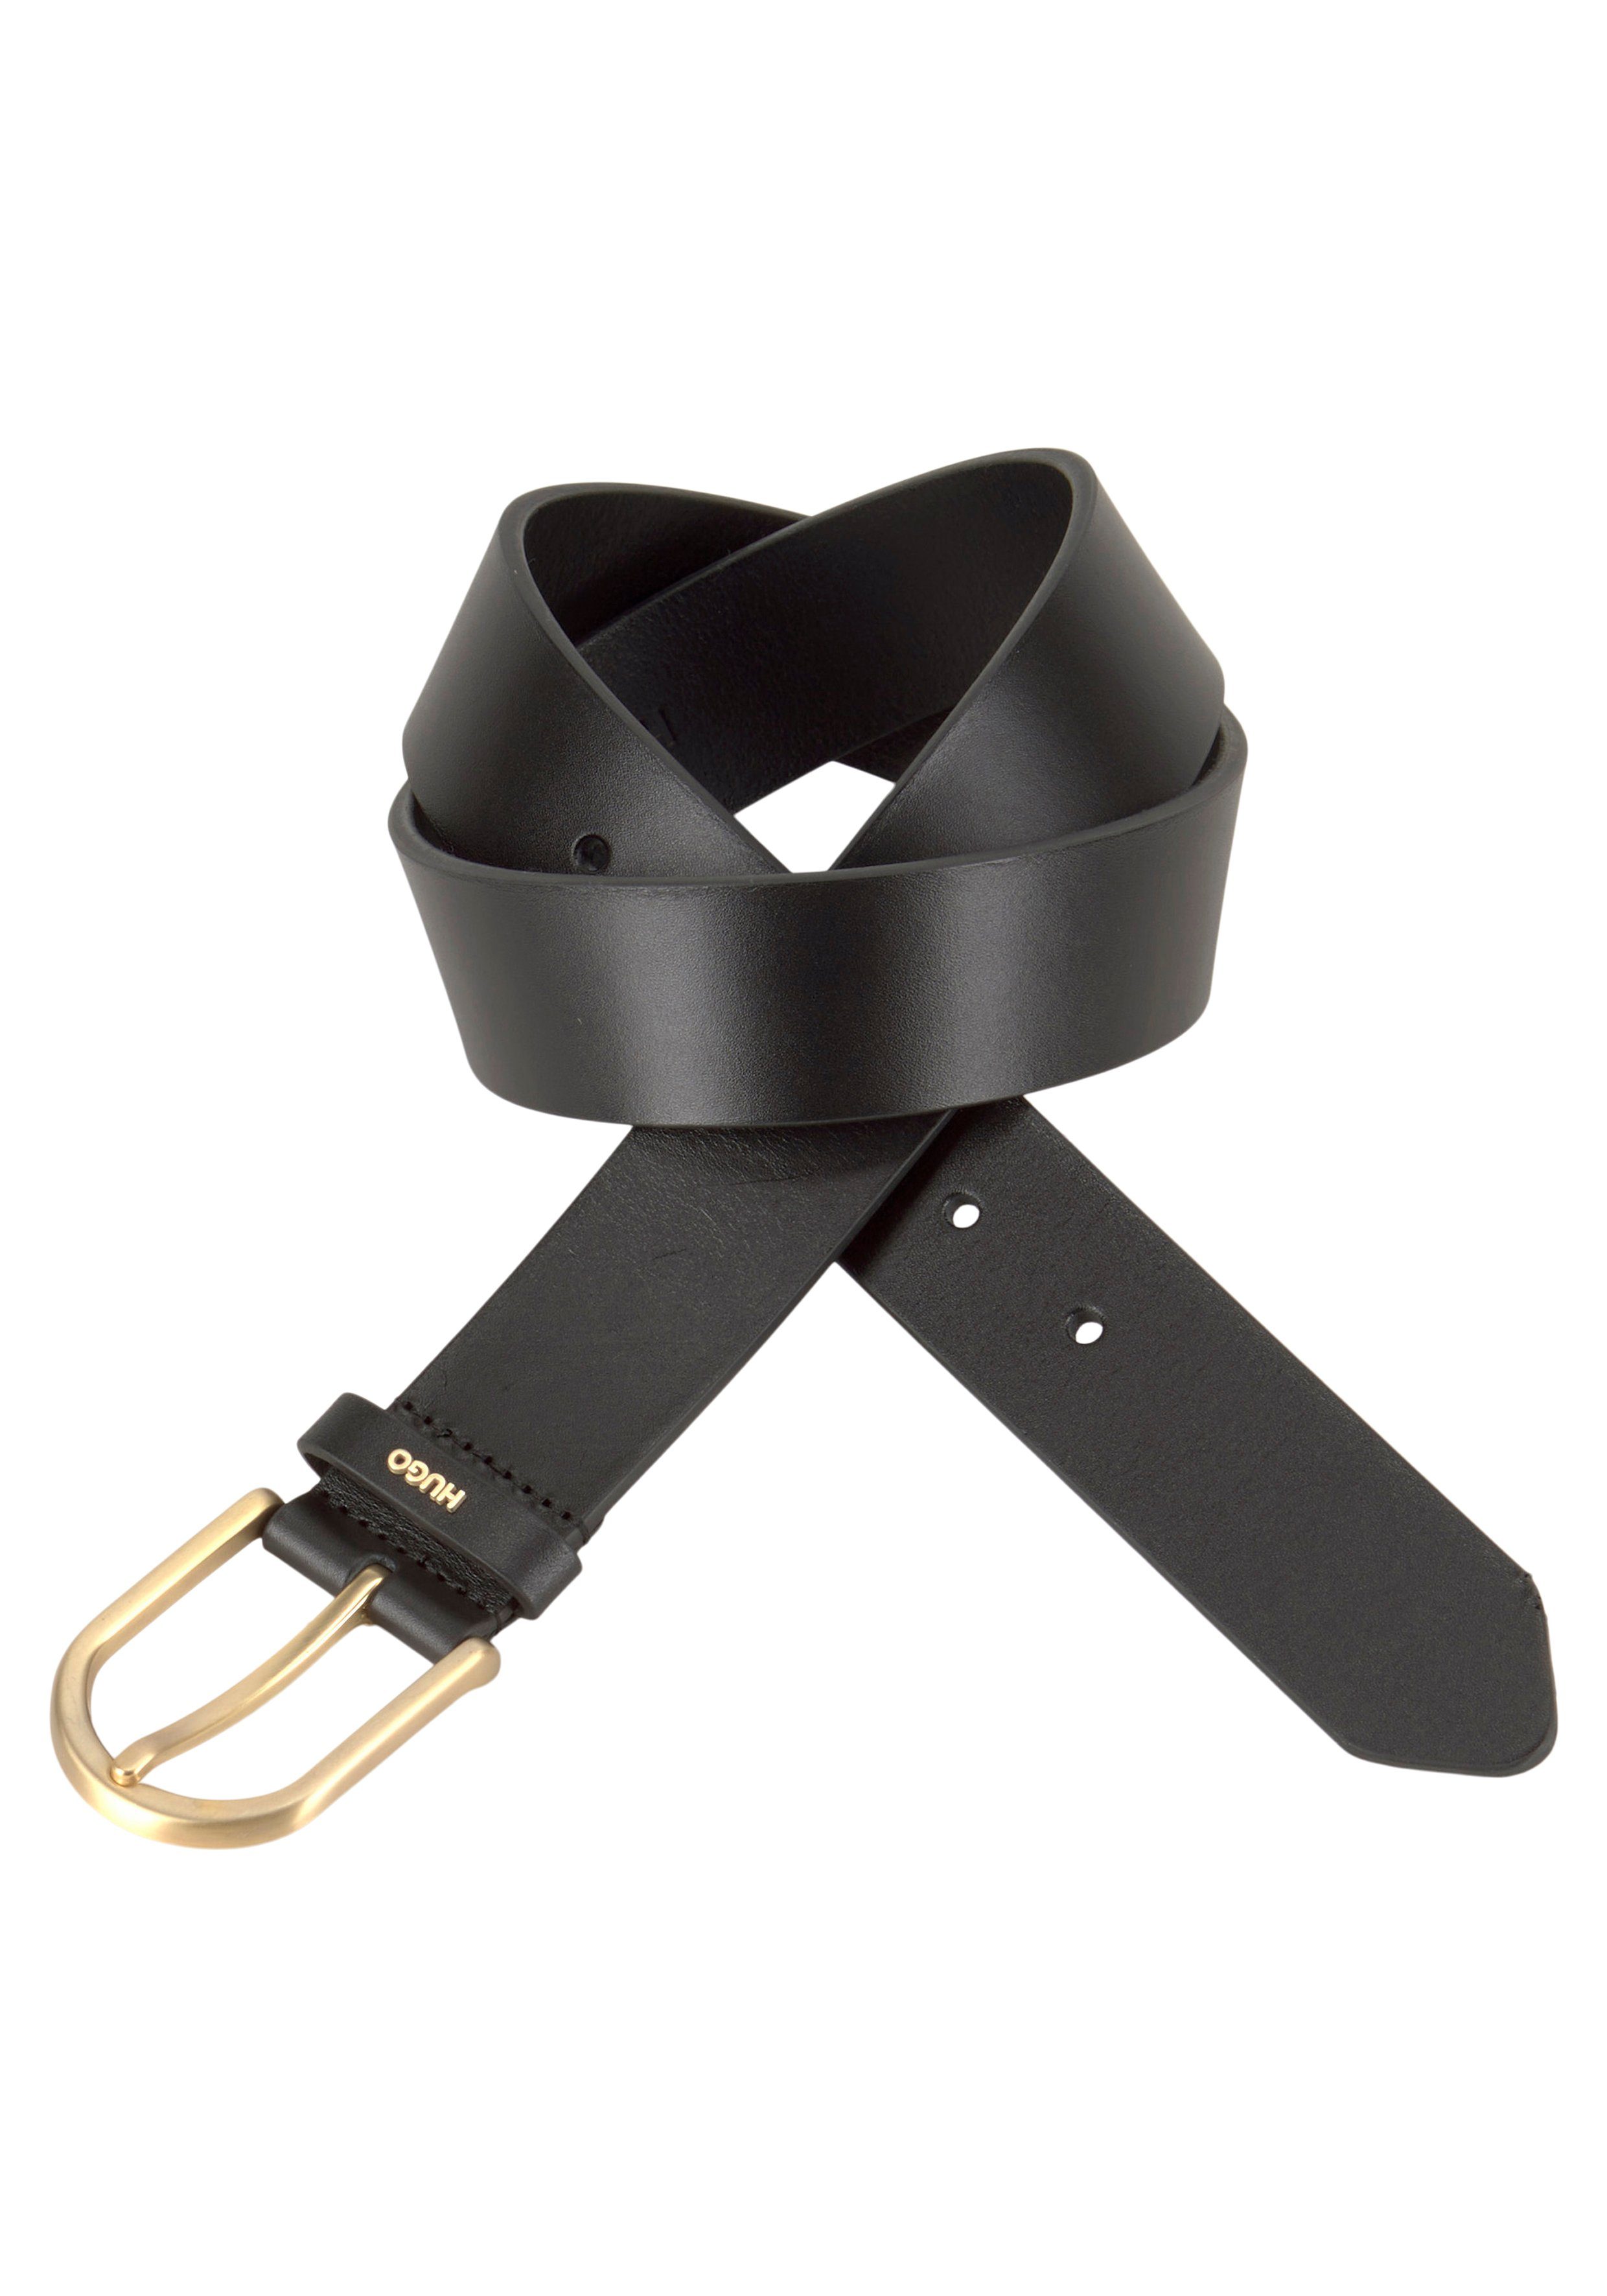 35cm Zoey Belt mit Ledergürtel Verschluss am HUGO Boss-Prägung Black kontrastfarbener